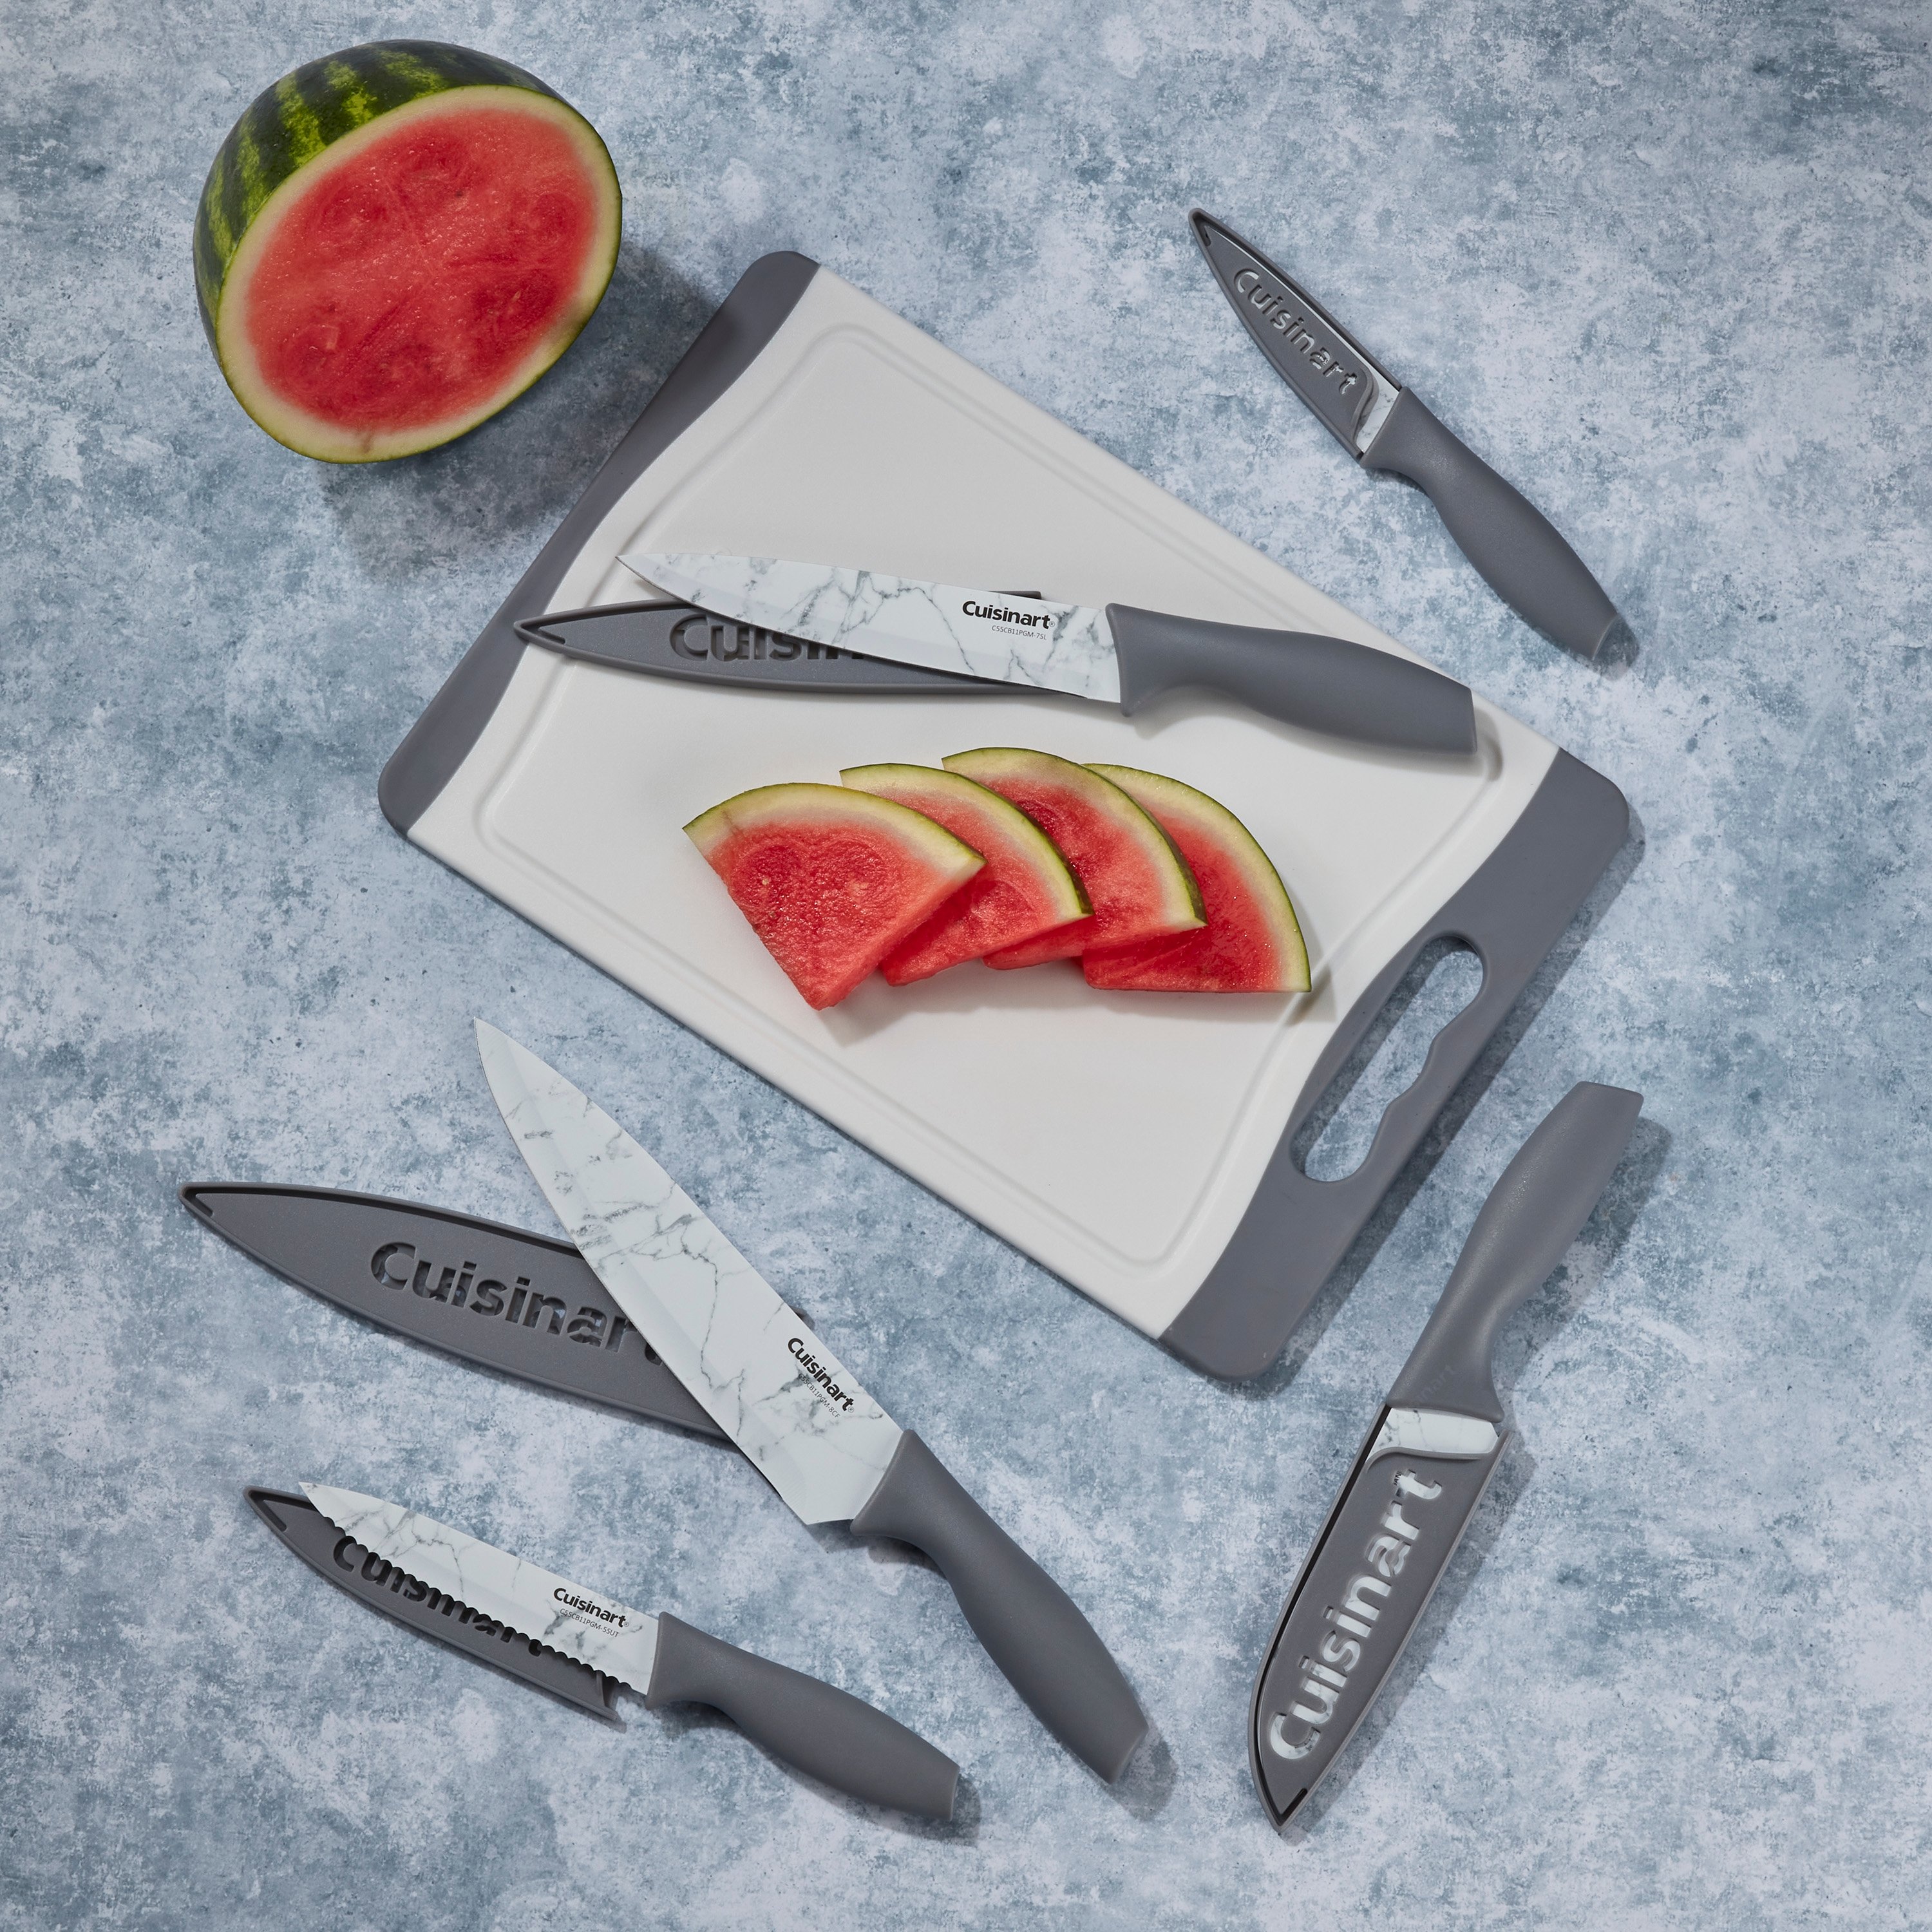 Cuisinart Classic Stainless Steel Santoku Knife Set, 4 Piece